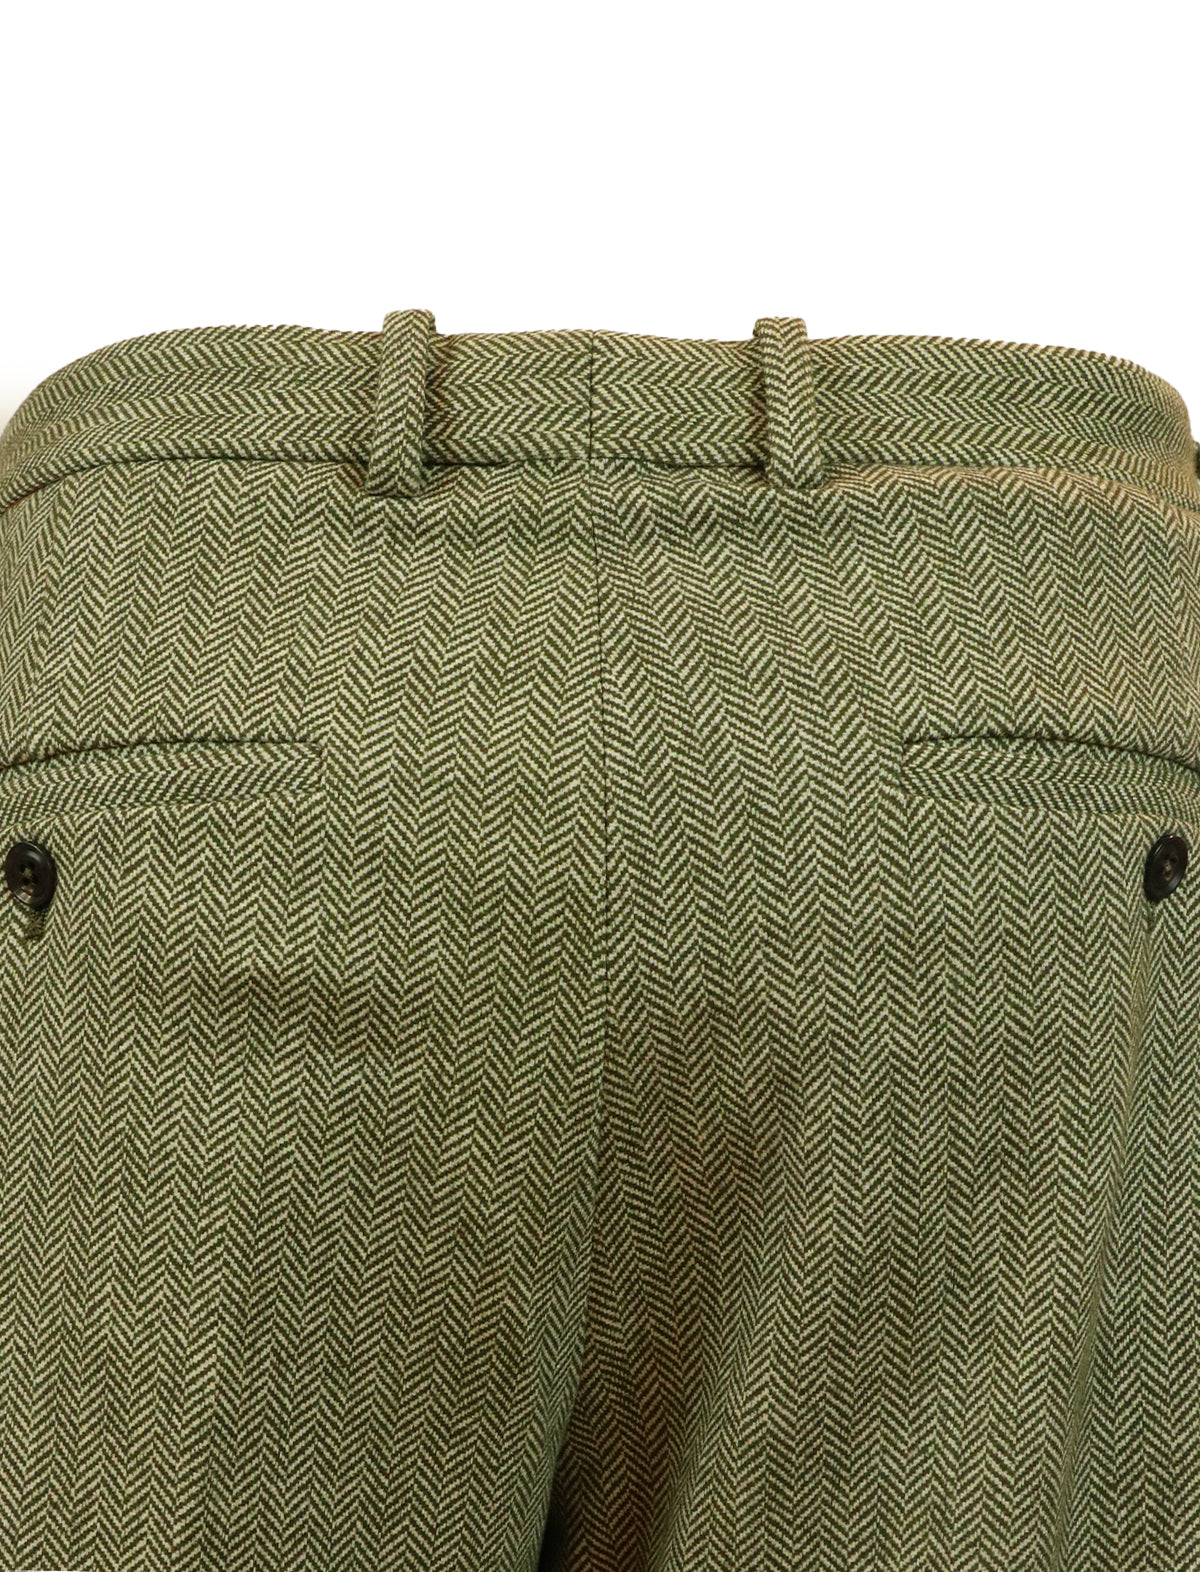 CIRCOLO 1901 Coulisse Herringbone Pants in Caper Green